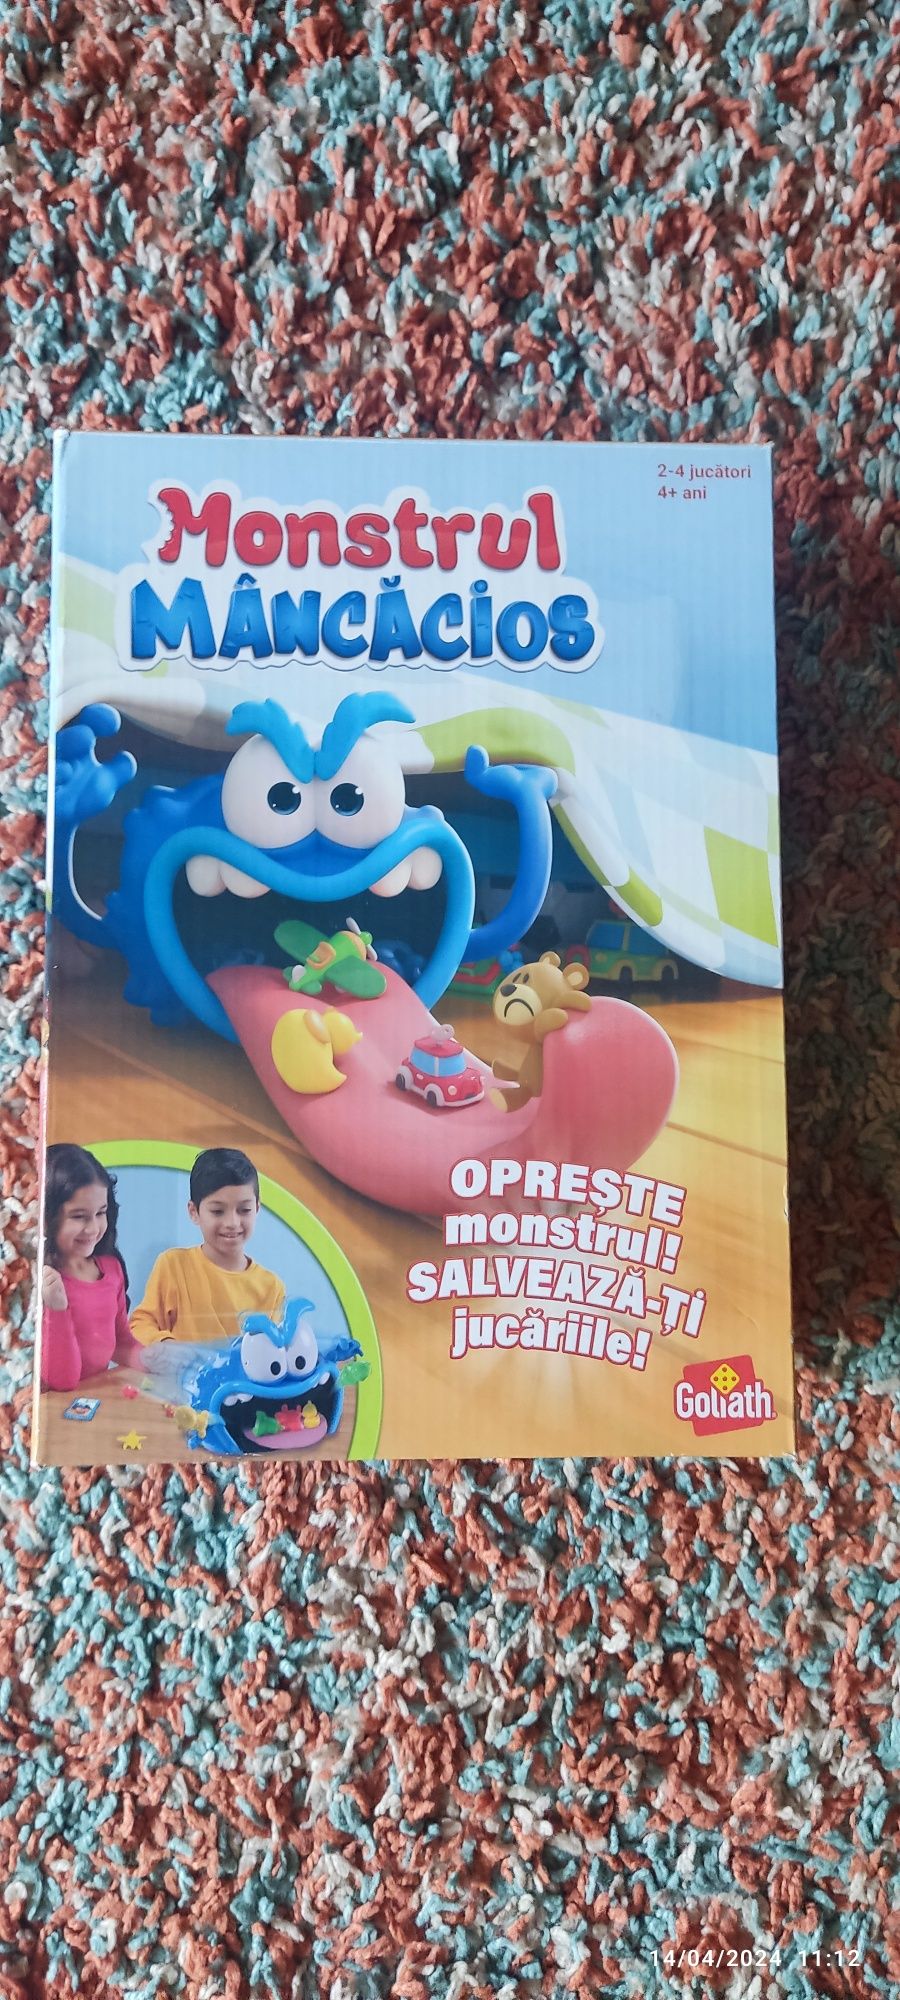 JOC Monstrul Mancacios